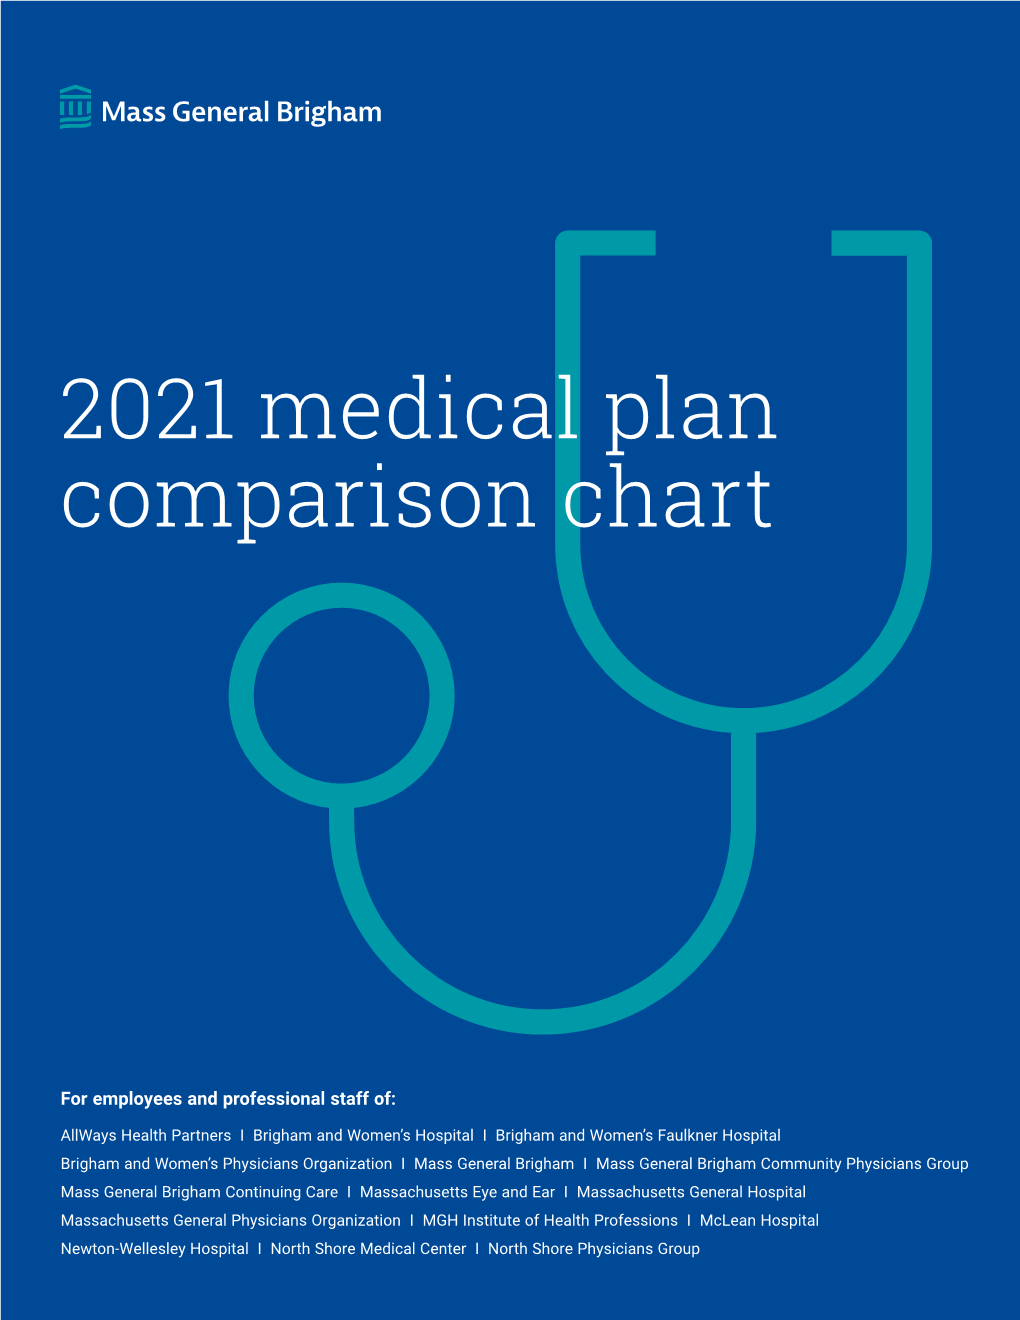 2021 Medical Plan Comparison Chart